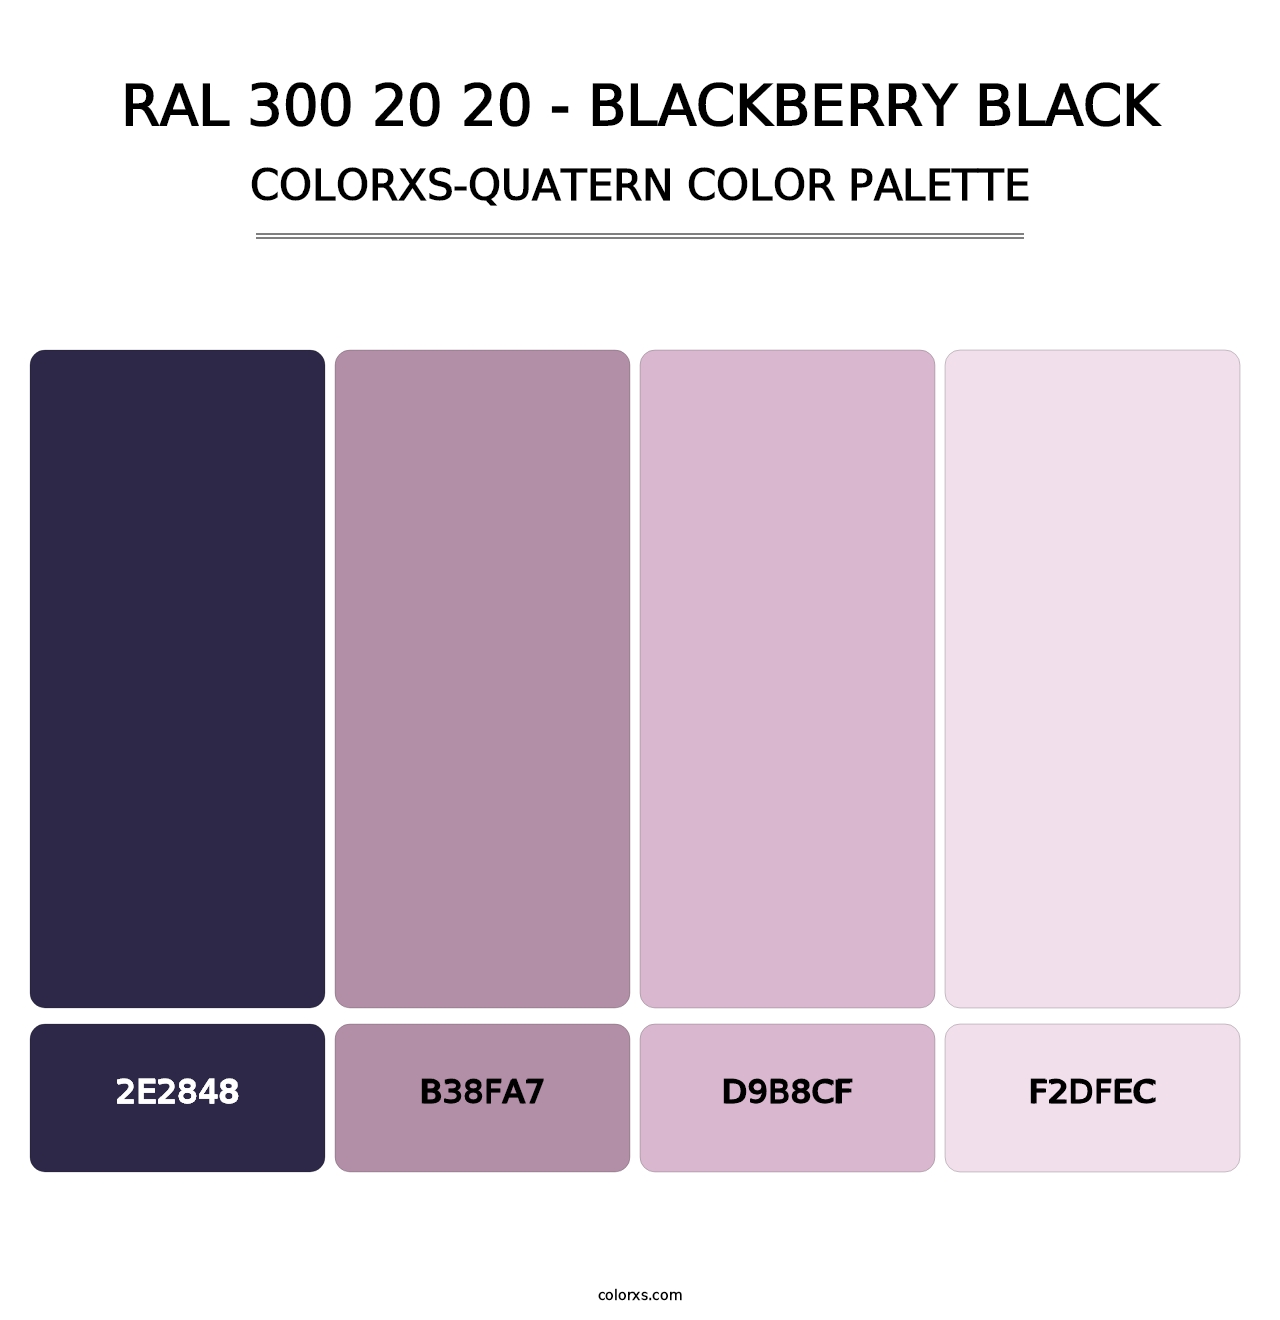 RAL 300 20 20 - Blackberry Black - Colorxs Quatern Palette